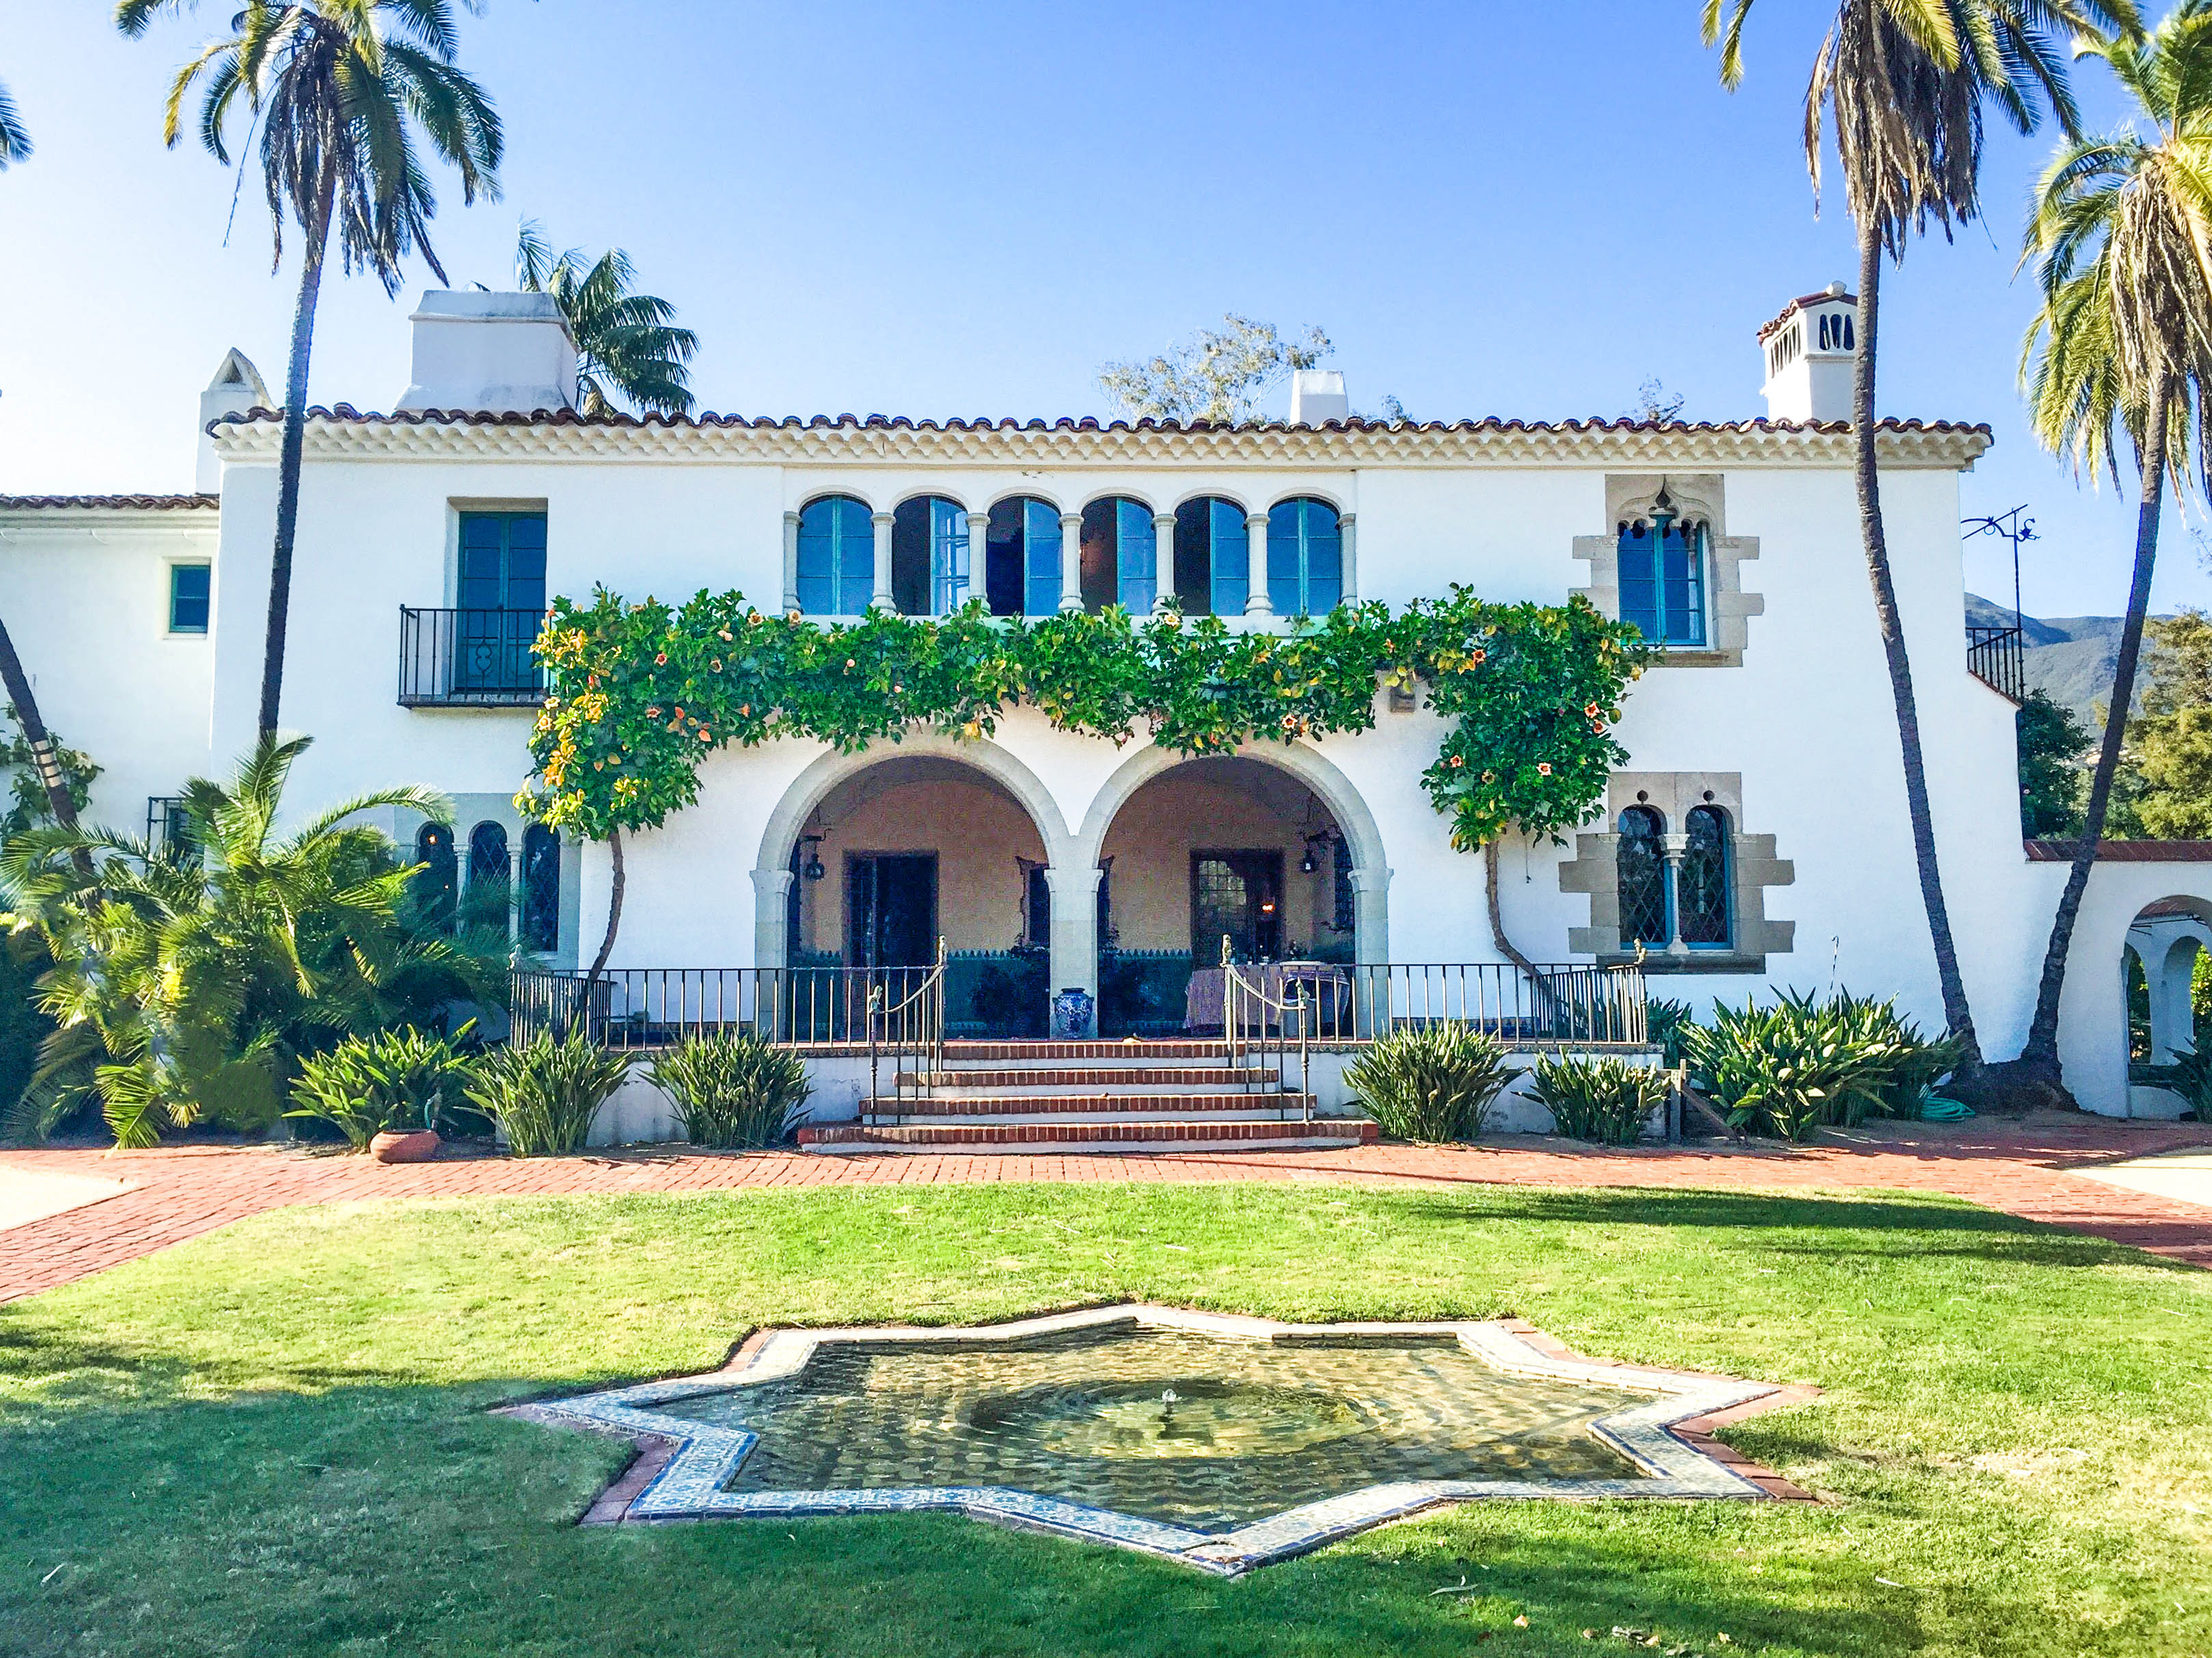 Casa Del Herrero | Santa Barbara Culture